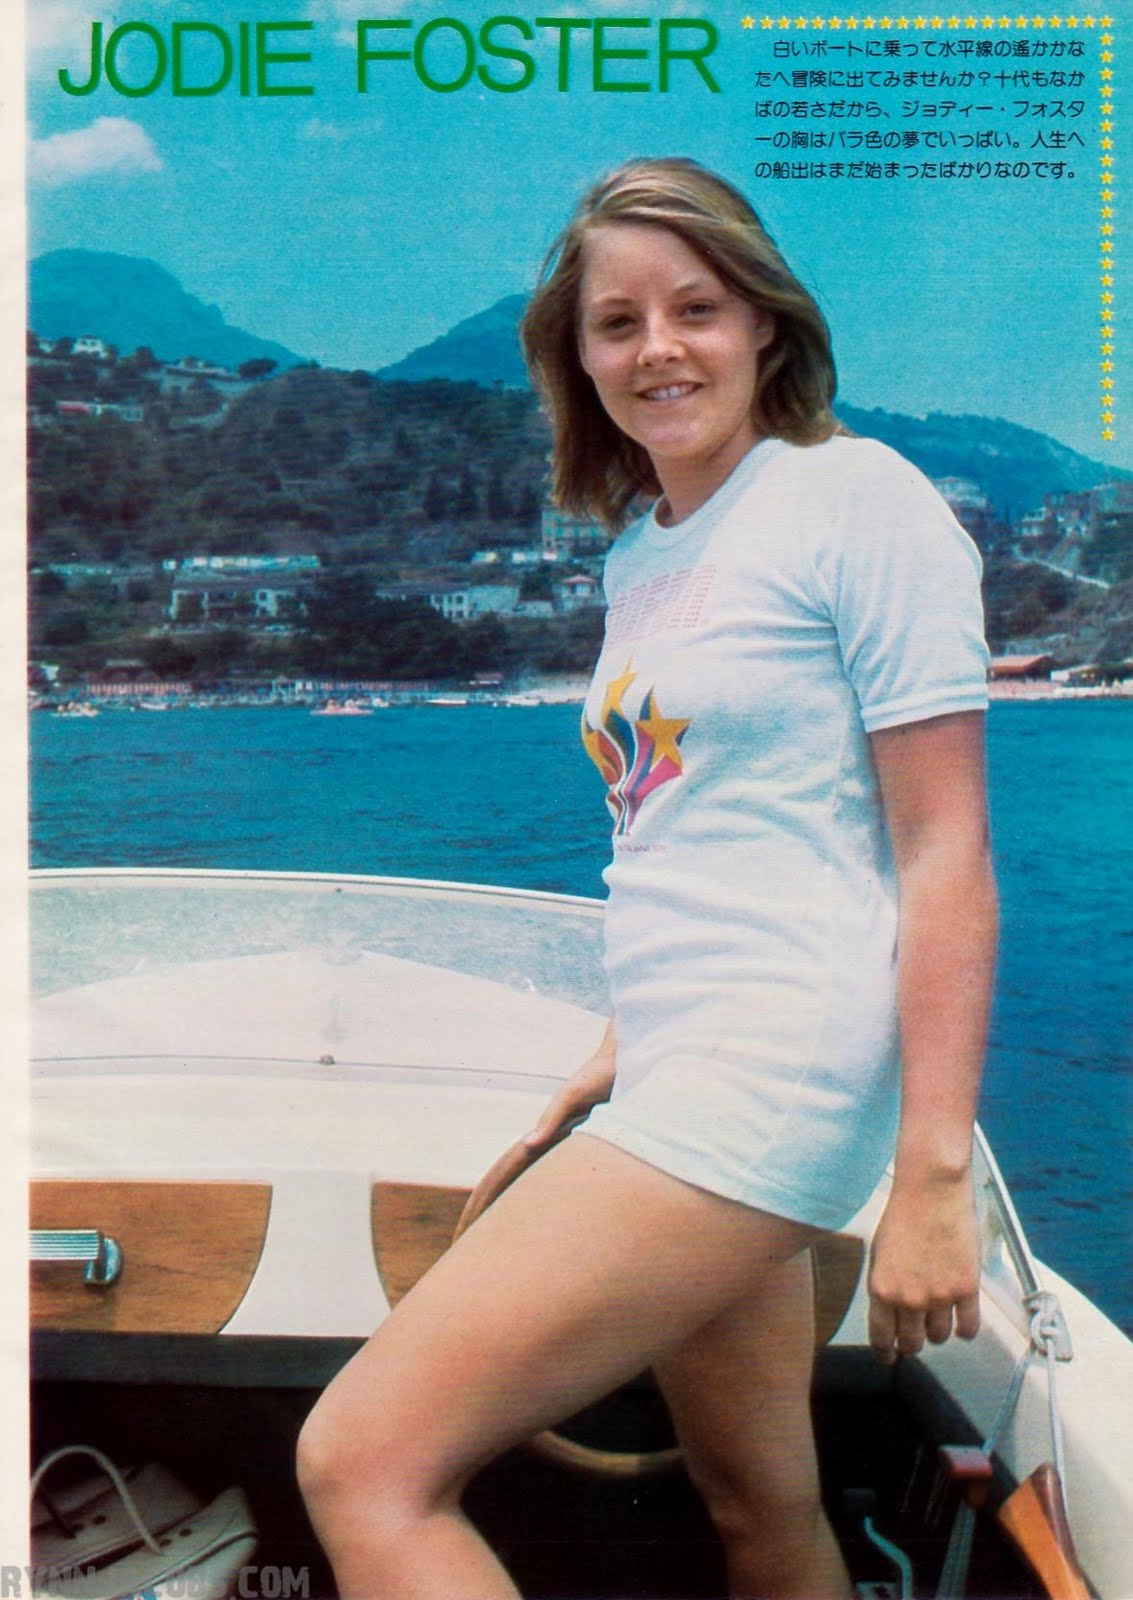 The Jodie Foster Museum: Boat series, Japan mag 1979, photos by Jadran 